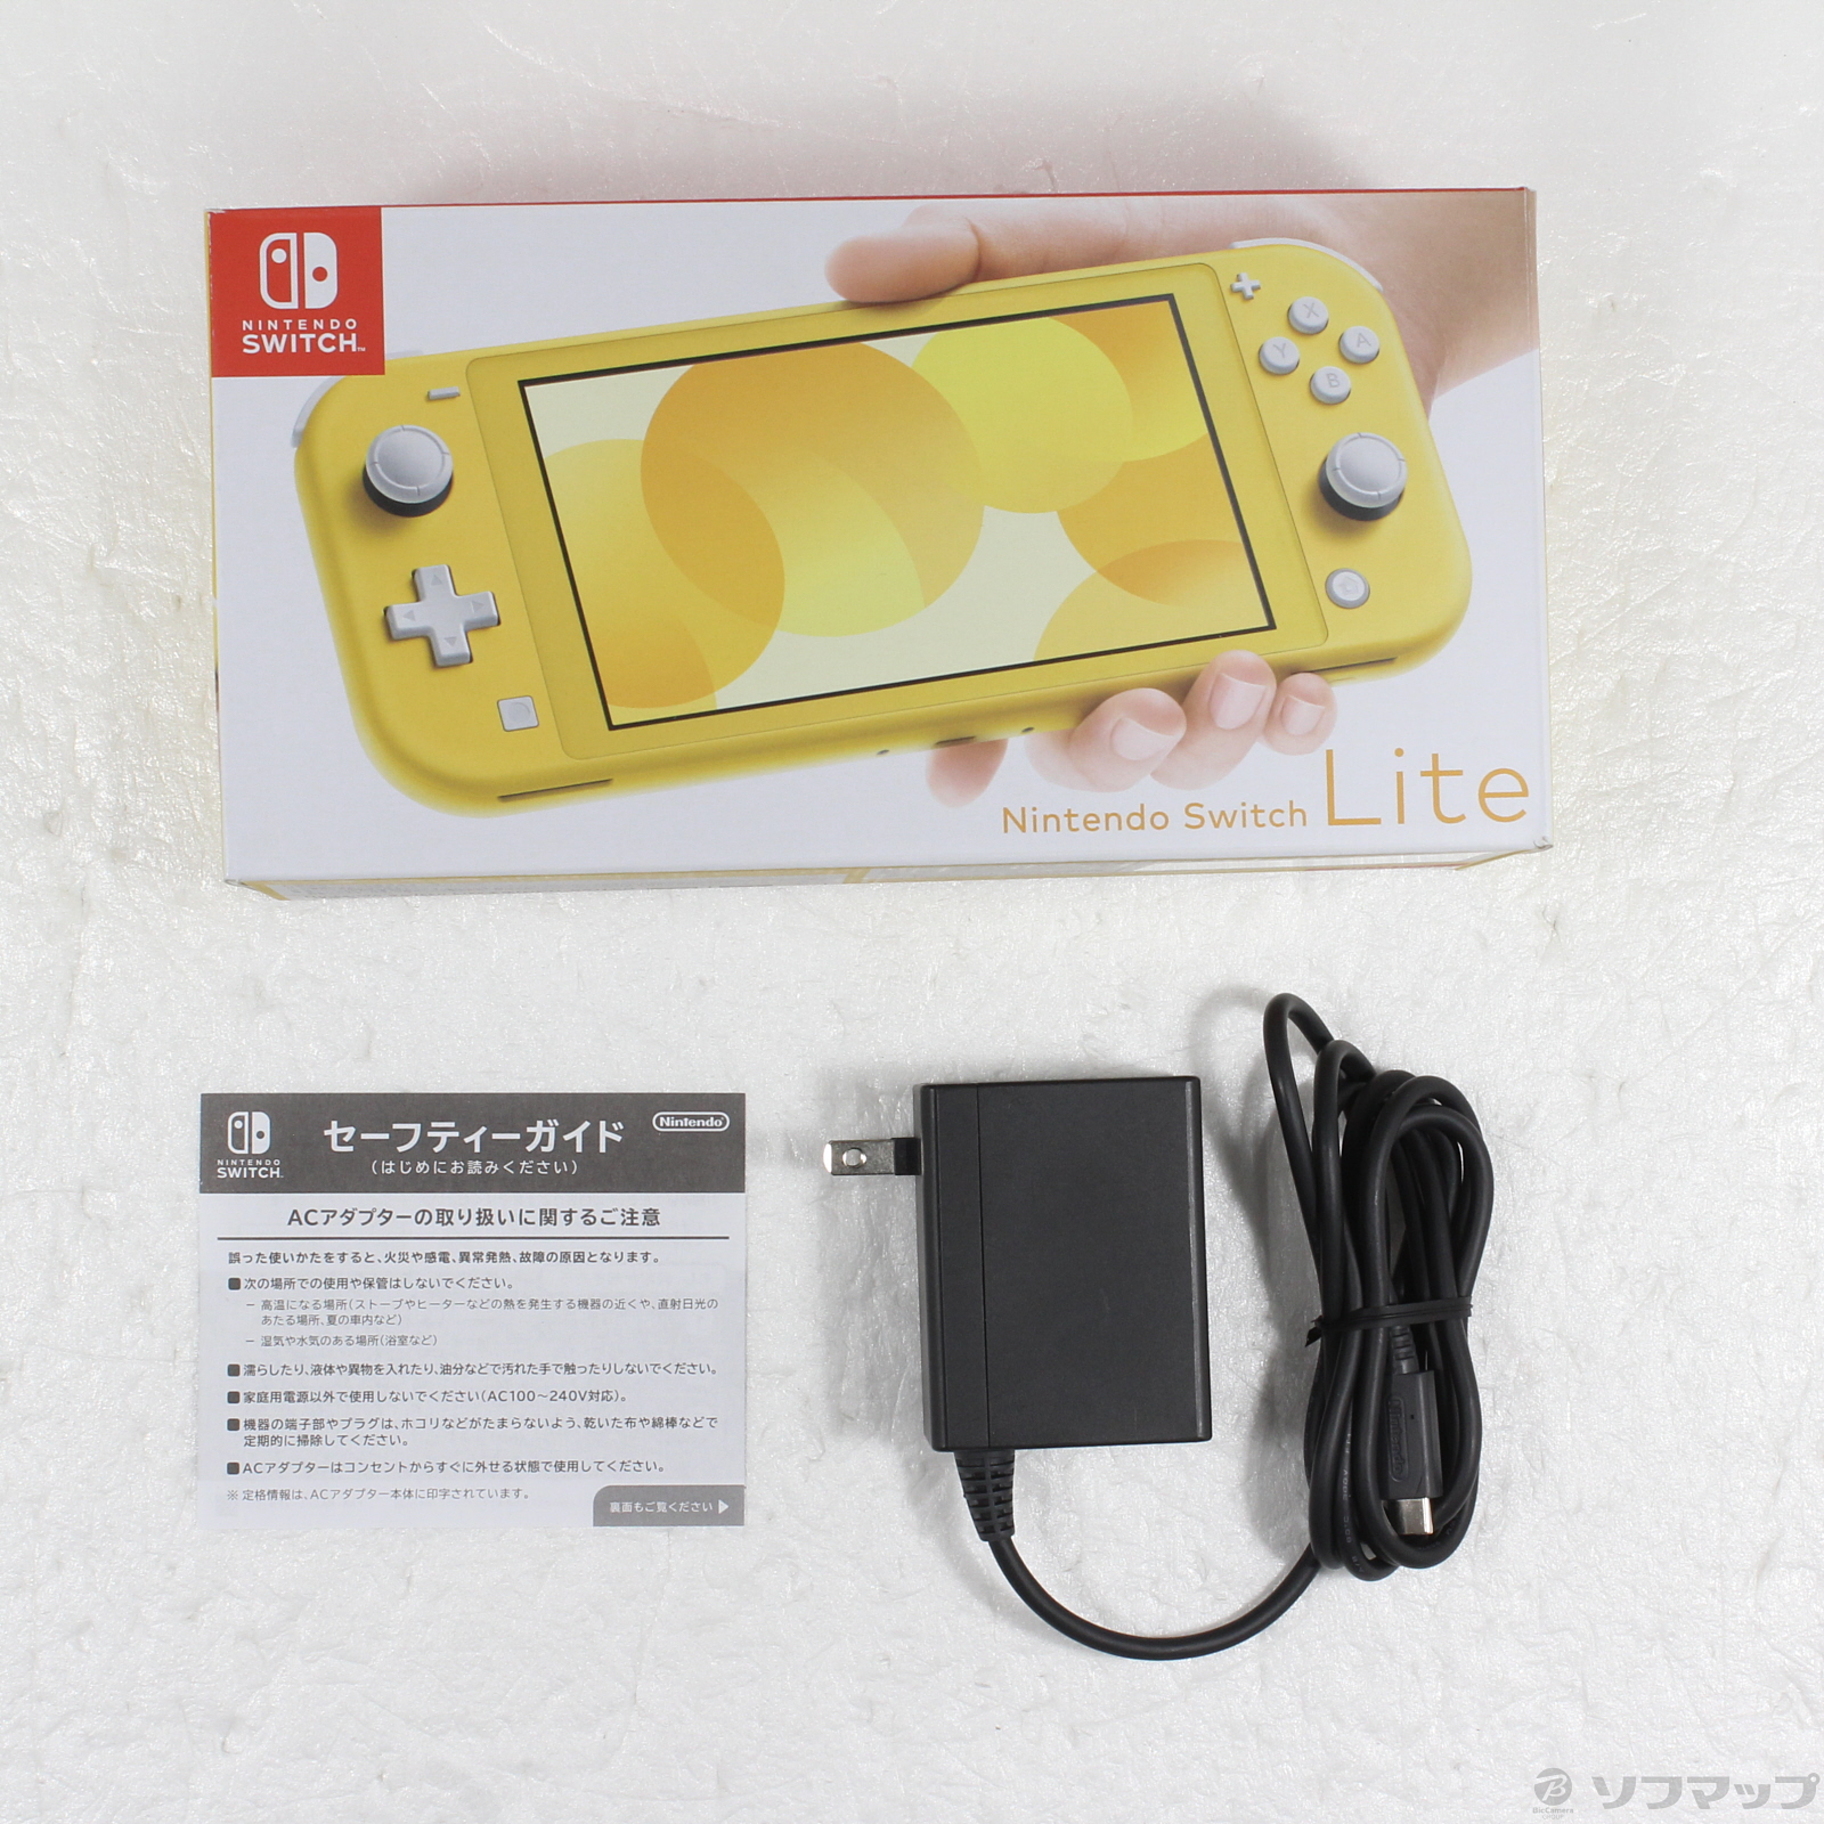 Switch lite 本体(イエロー)きぃらぃさくパパ様専用 - Nintendo Switch